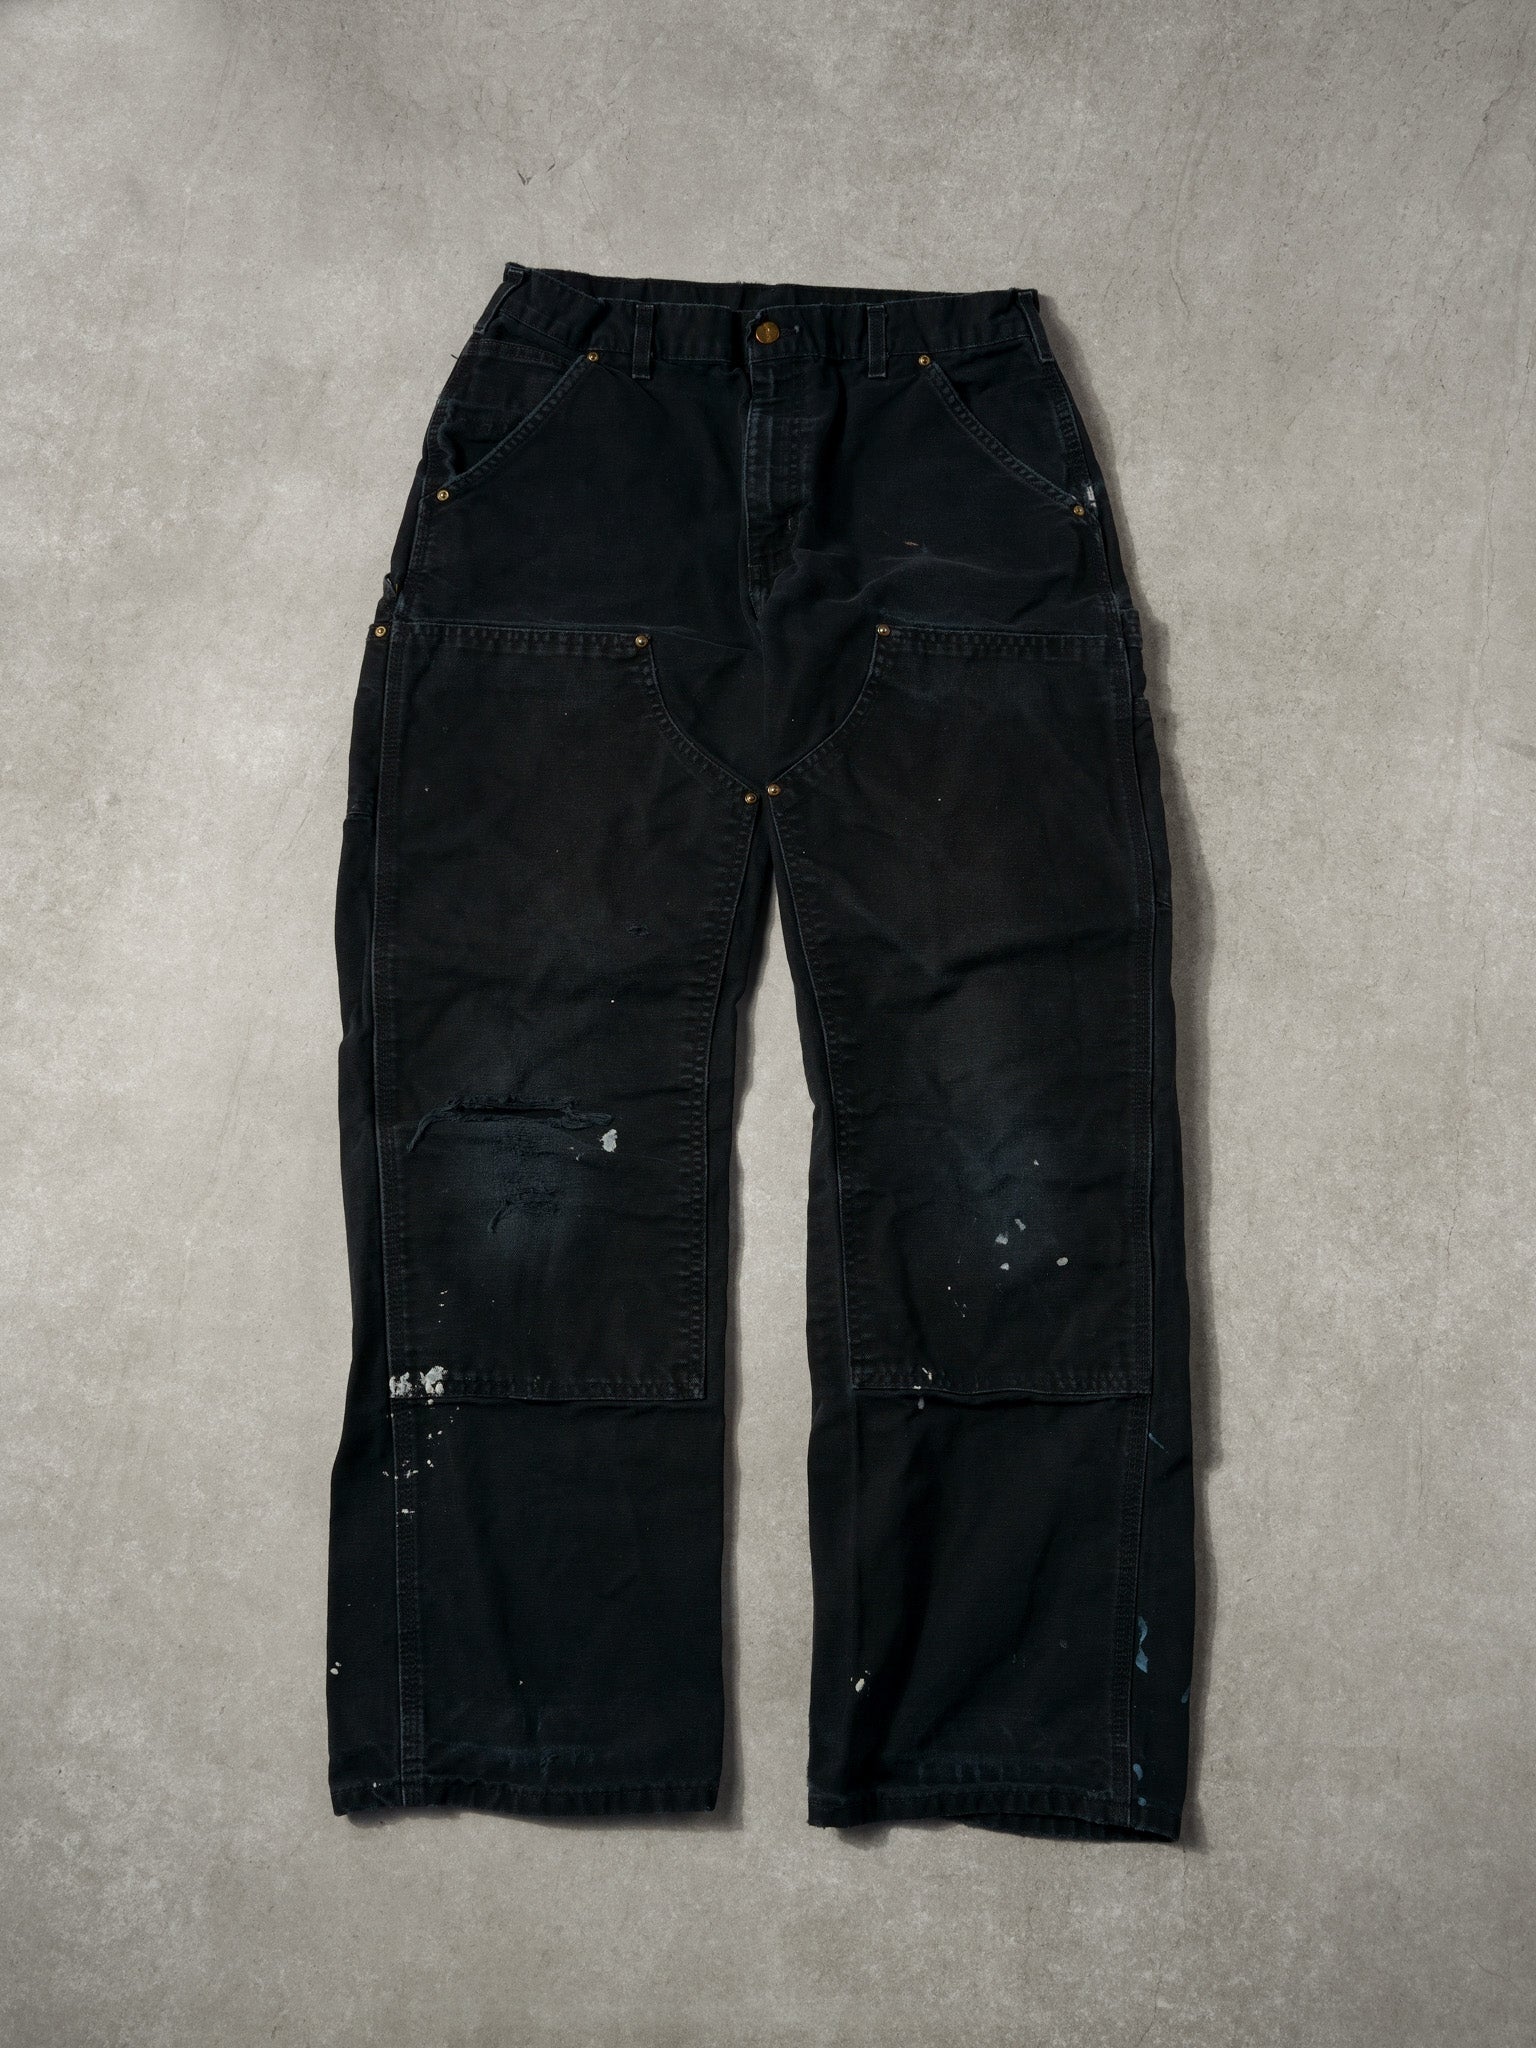 Vintage 90s Black Carhartt Double Knee Carpenter Pants (34x31)